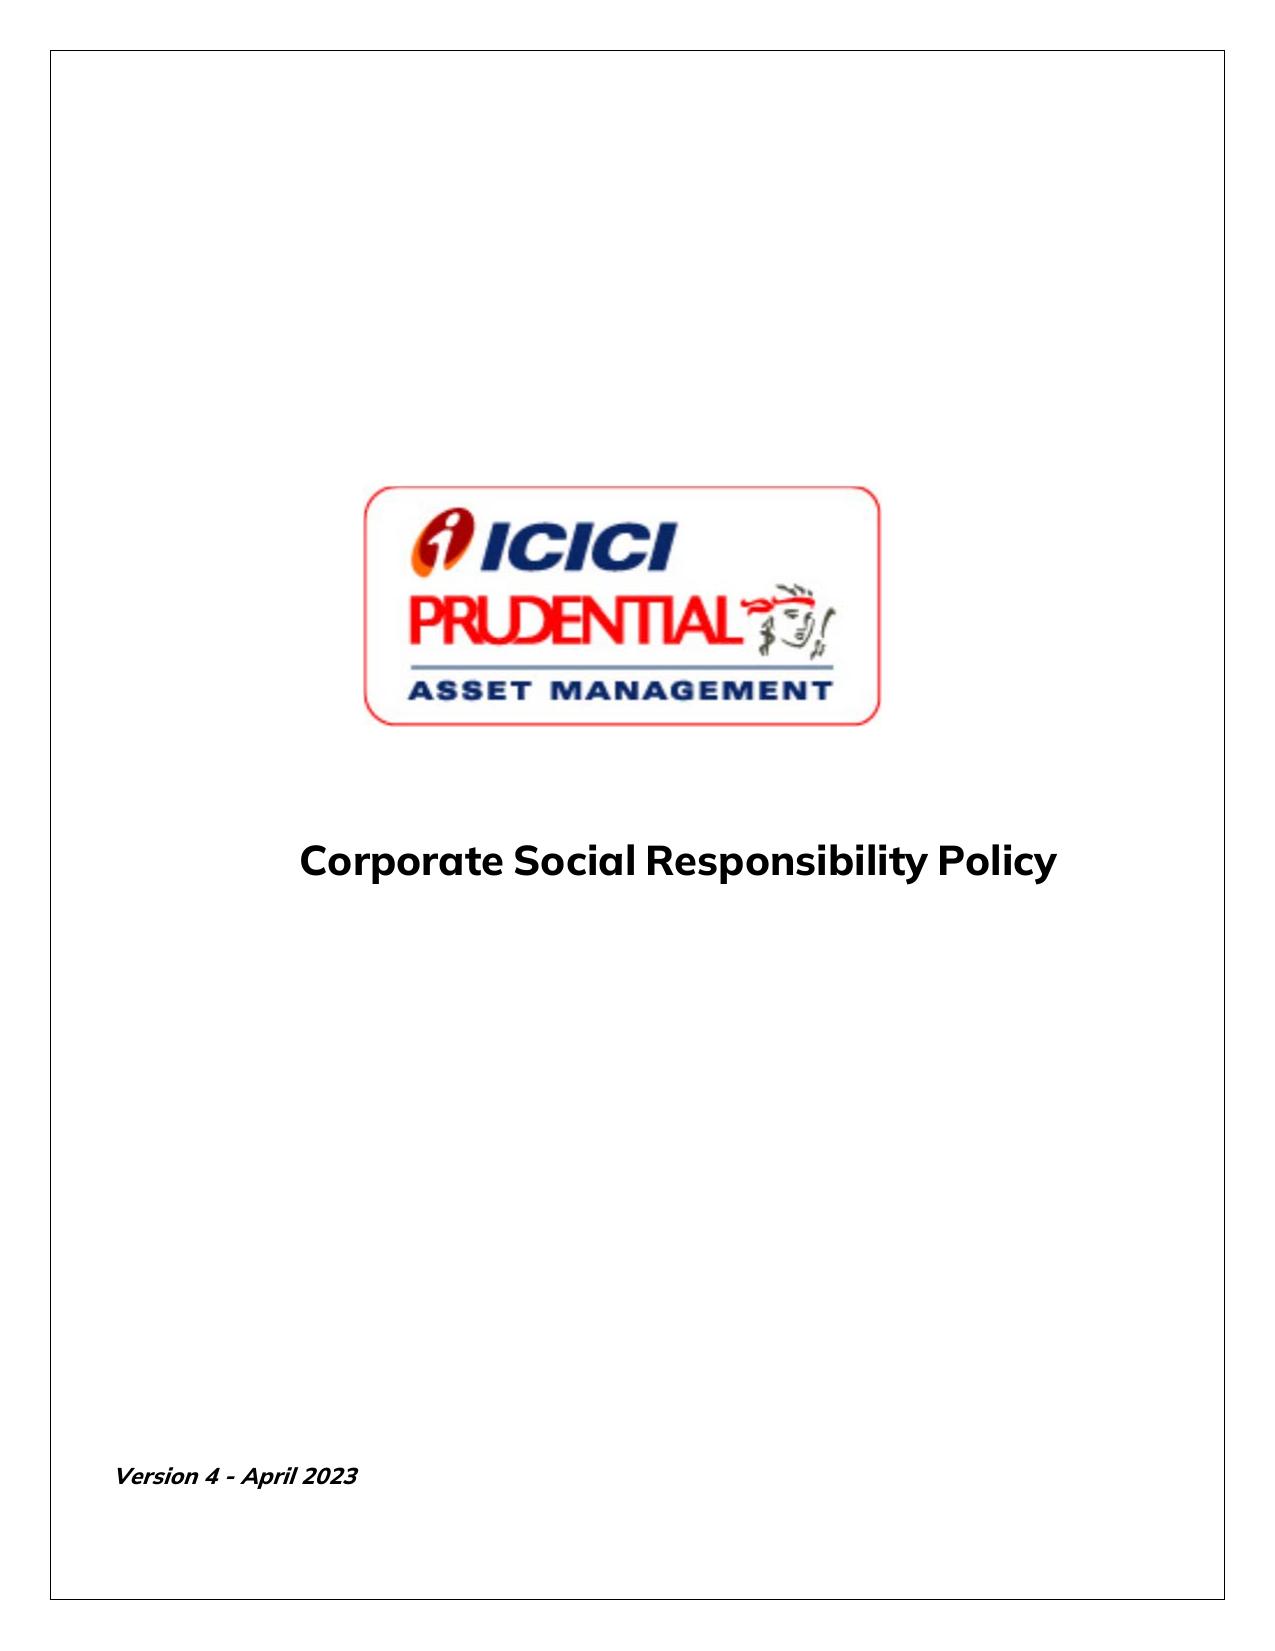 2023 Corporate social responsibility Report